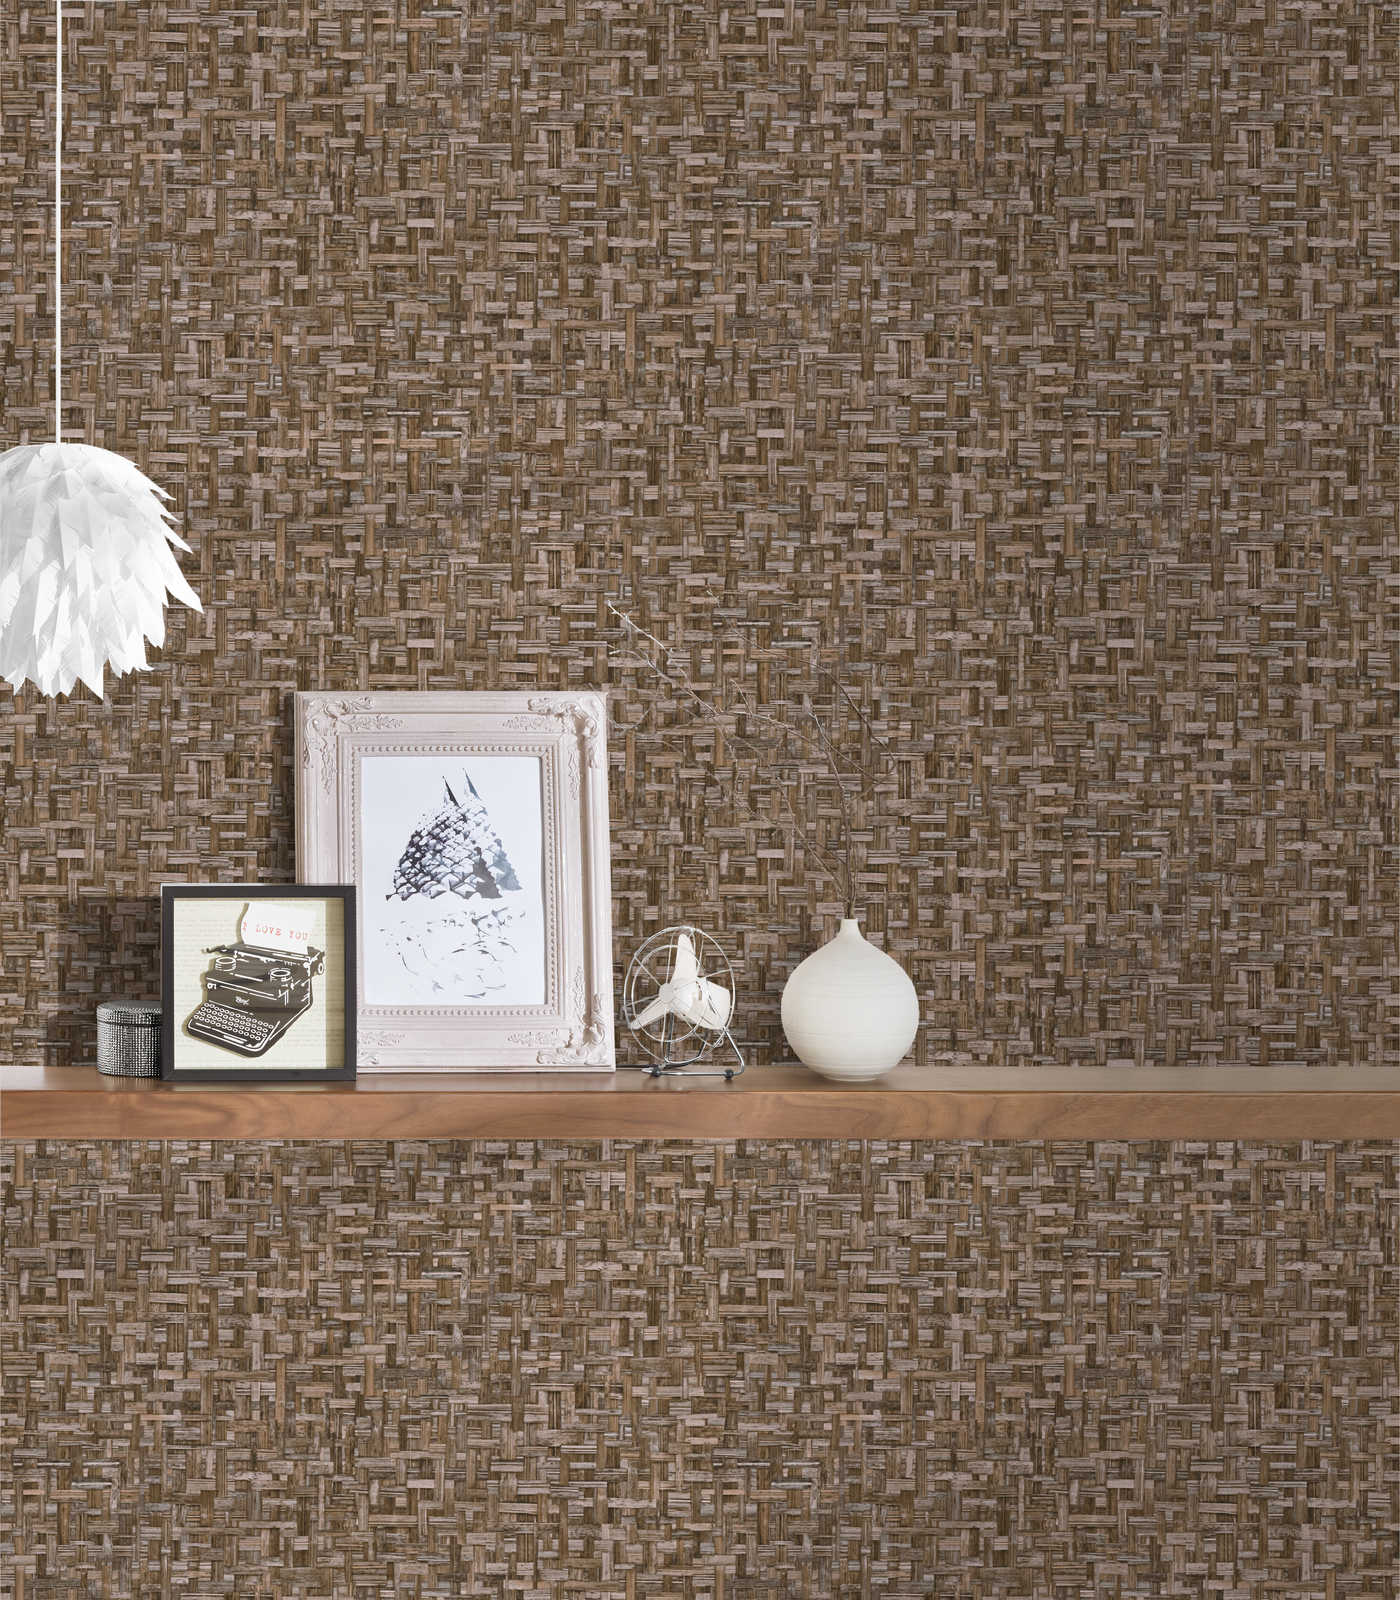             Wood look wallpaper brown with miro mosaic pattern - brown
        